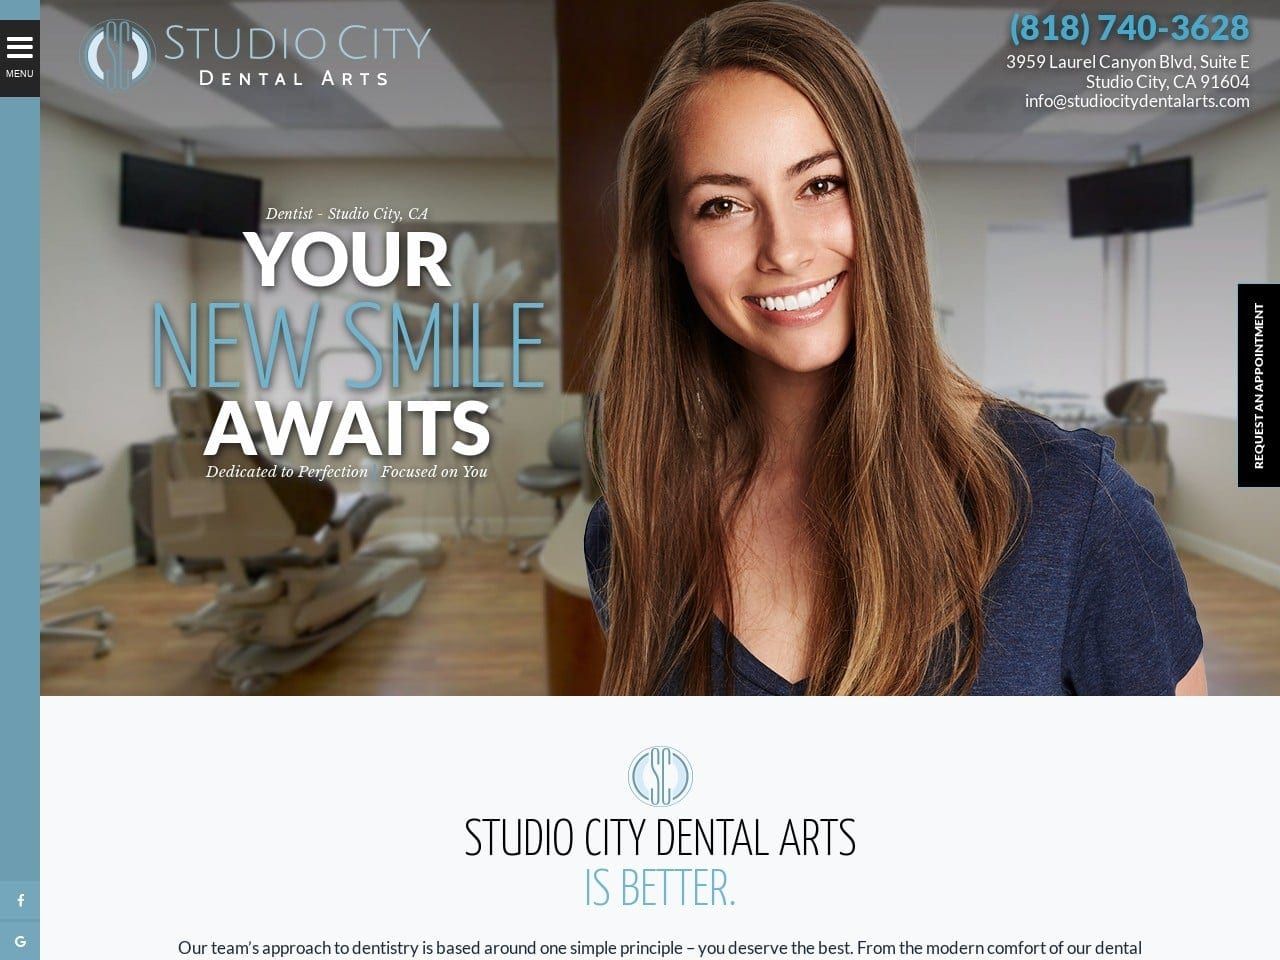 Studio City Dental Arts Website Screenshot from studiocitydentalarts.com